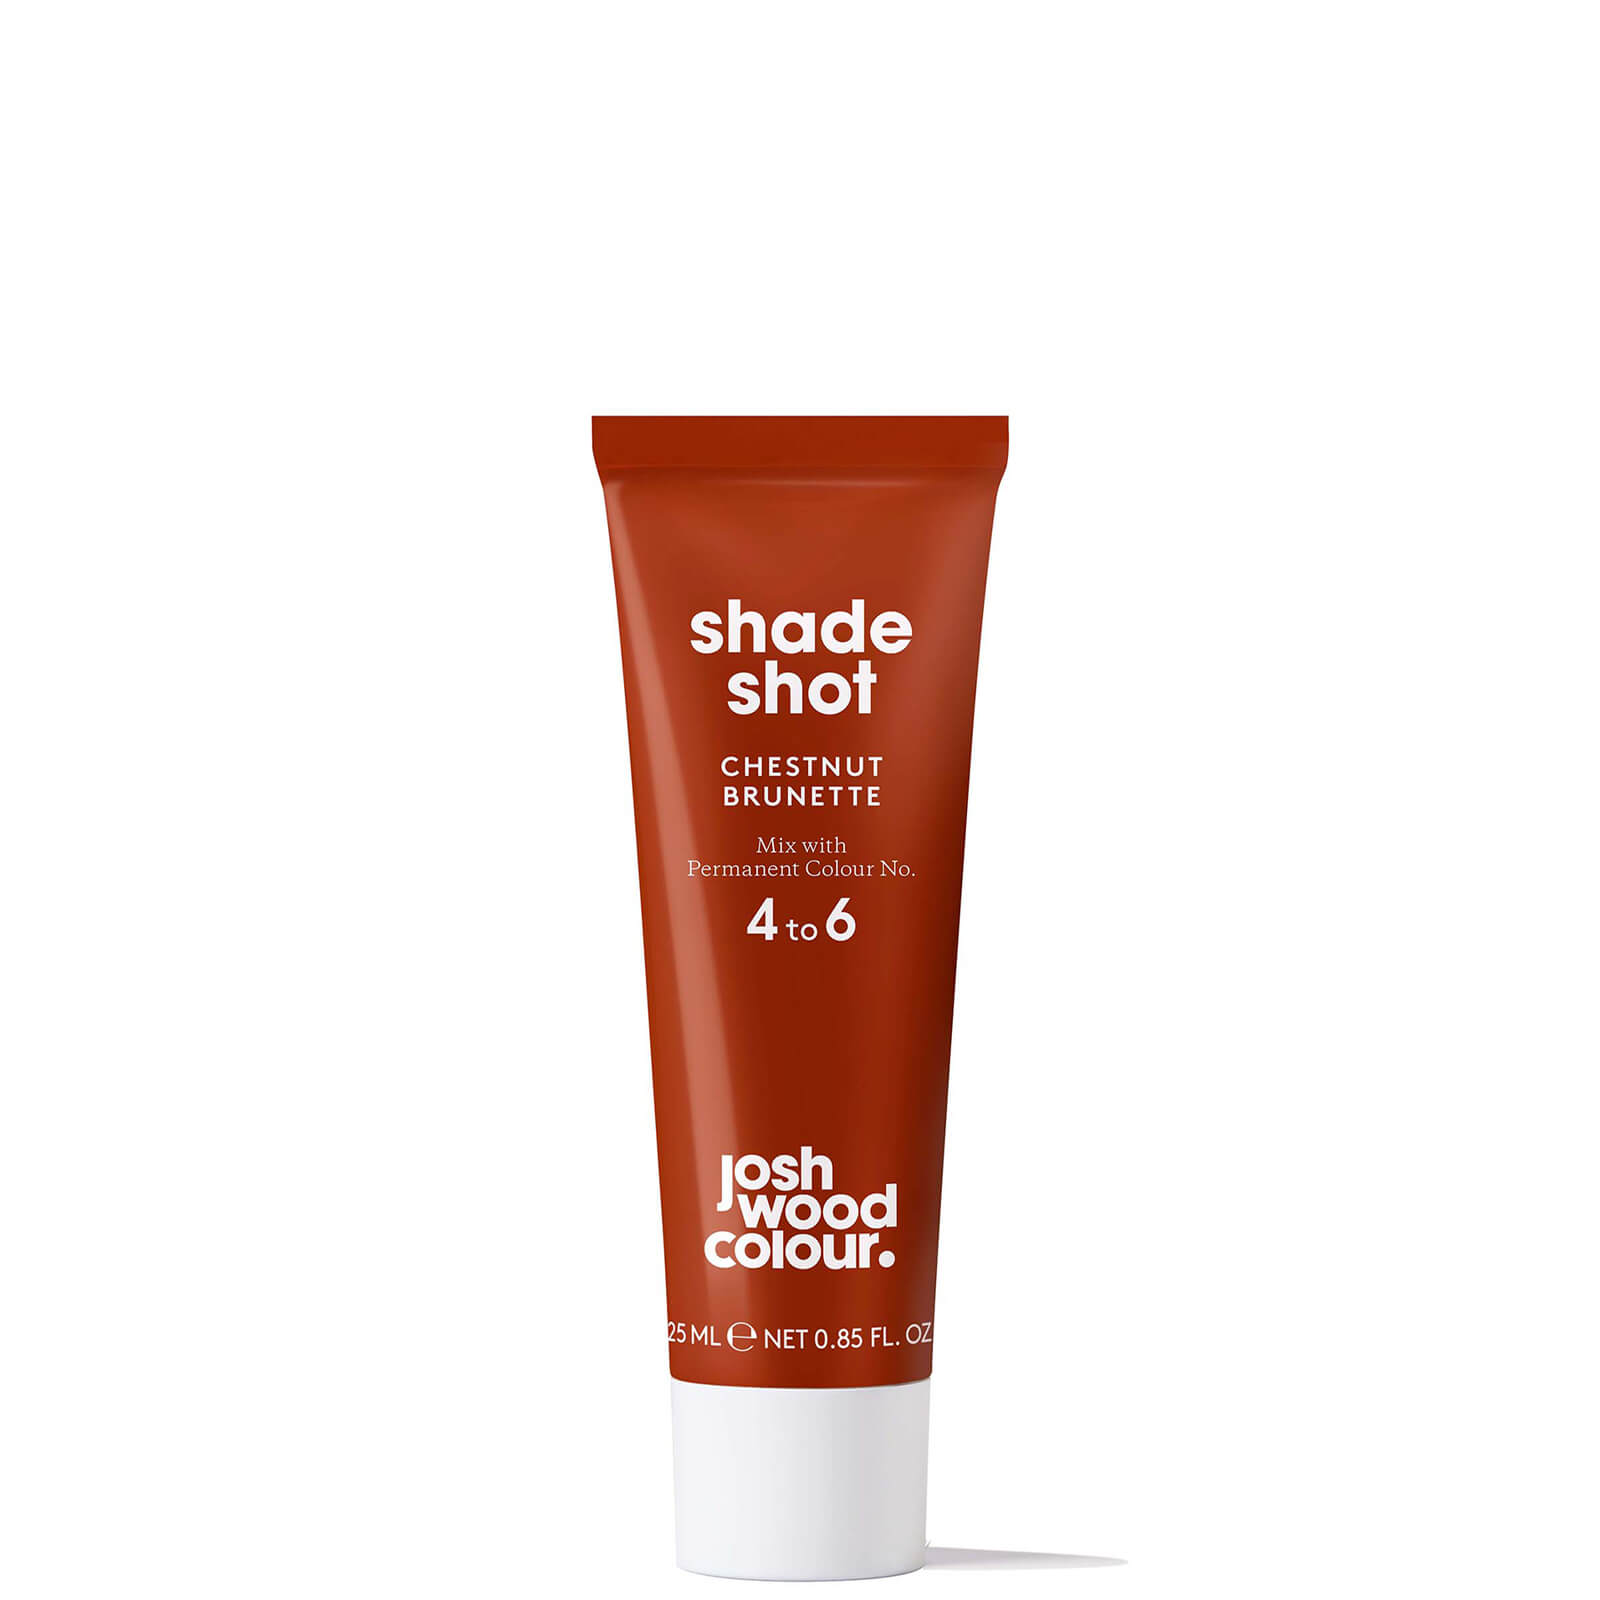 Josh Wood Colour Shade Shot 25g - (Various Shades) - Chestnut Brunette